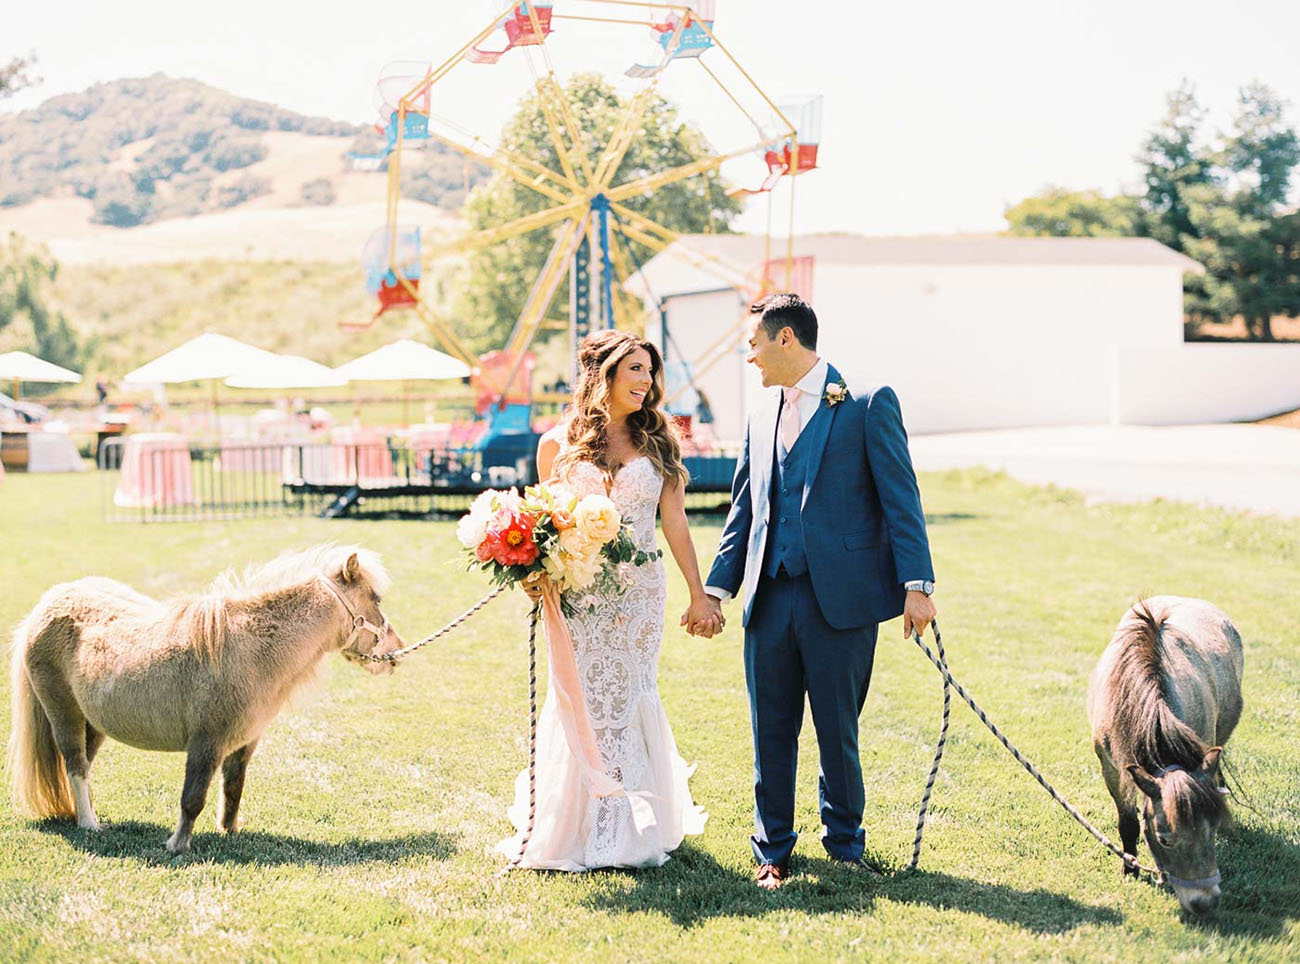 Summer Lovin’ Wedding, Complete With a Ferris Wheel!